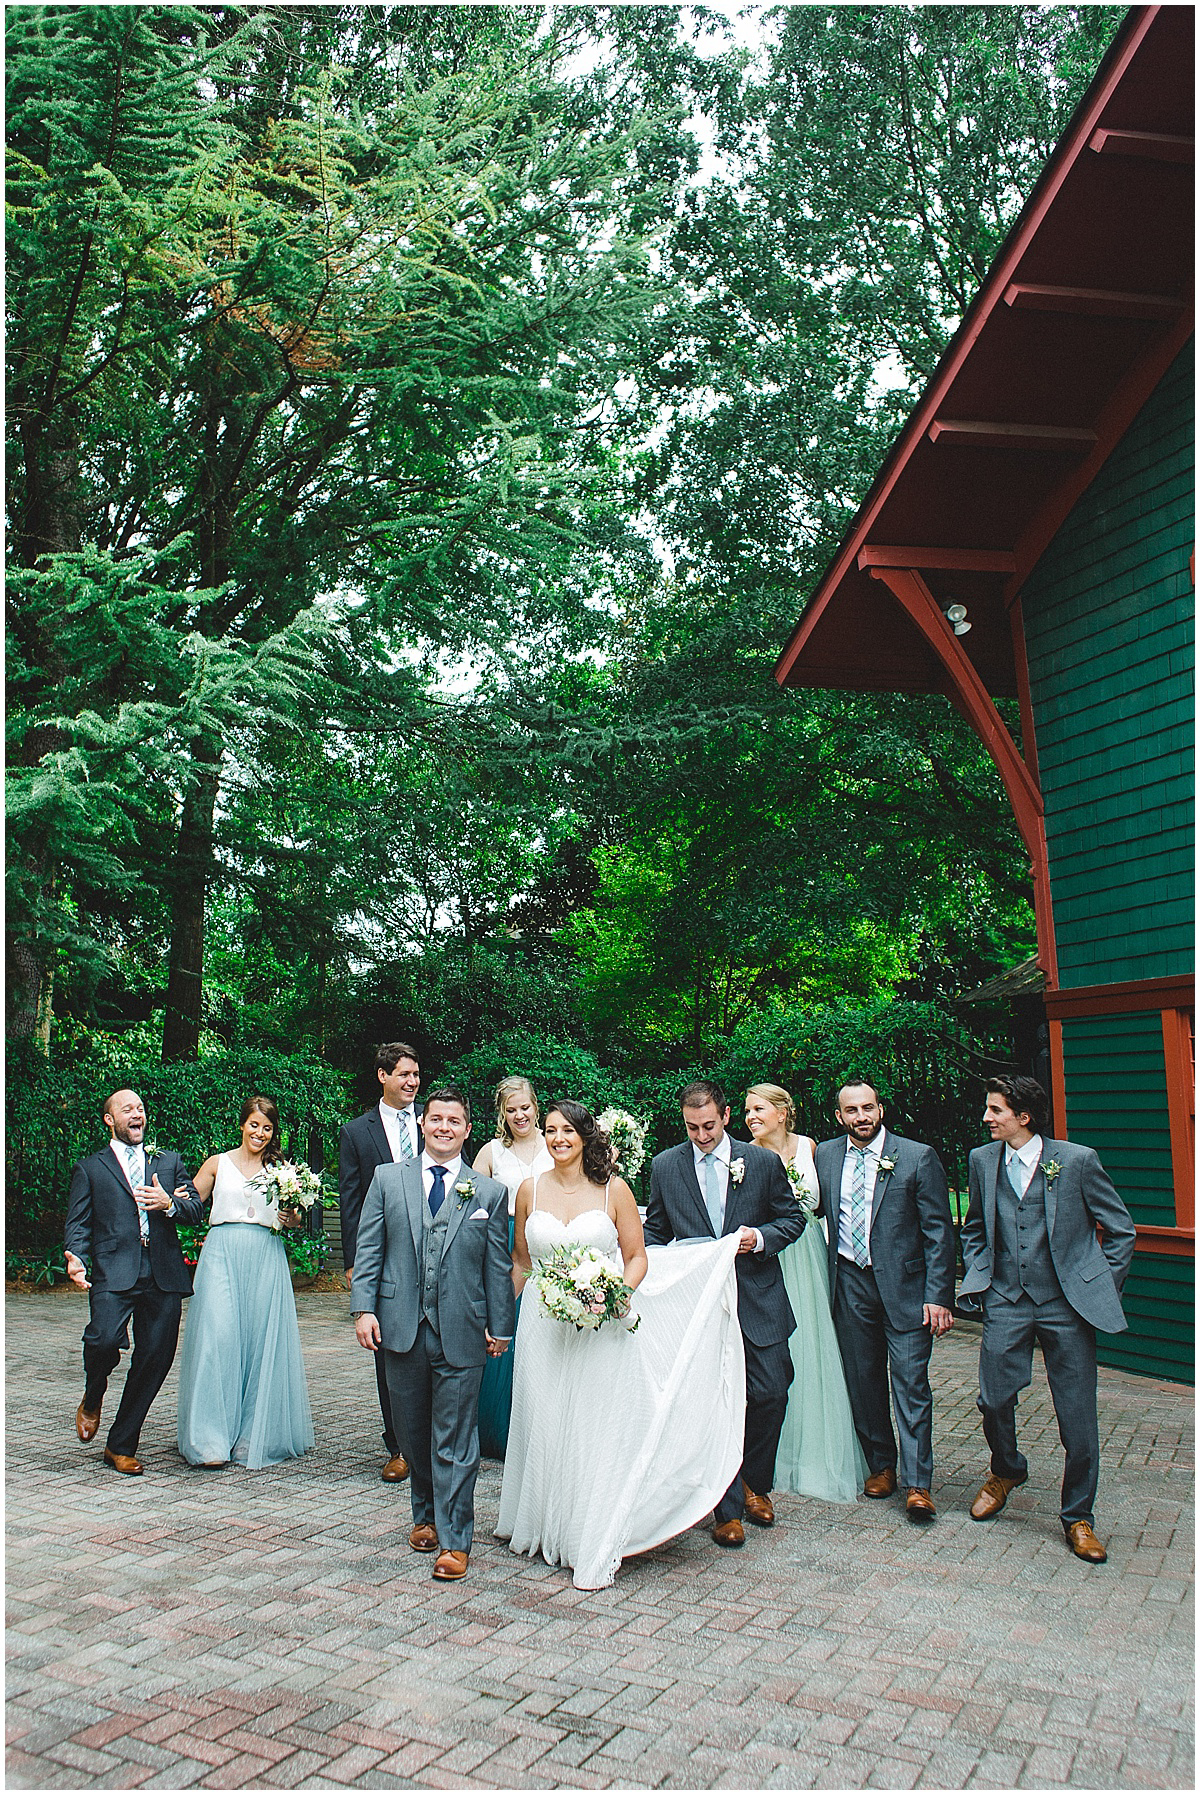 trolley barn wedding - Atlanta wedding photographer - wedding party poses